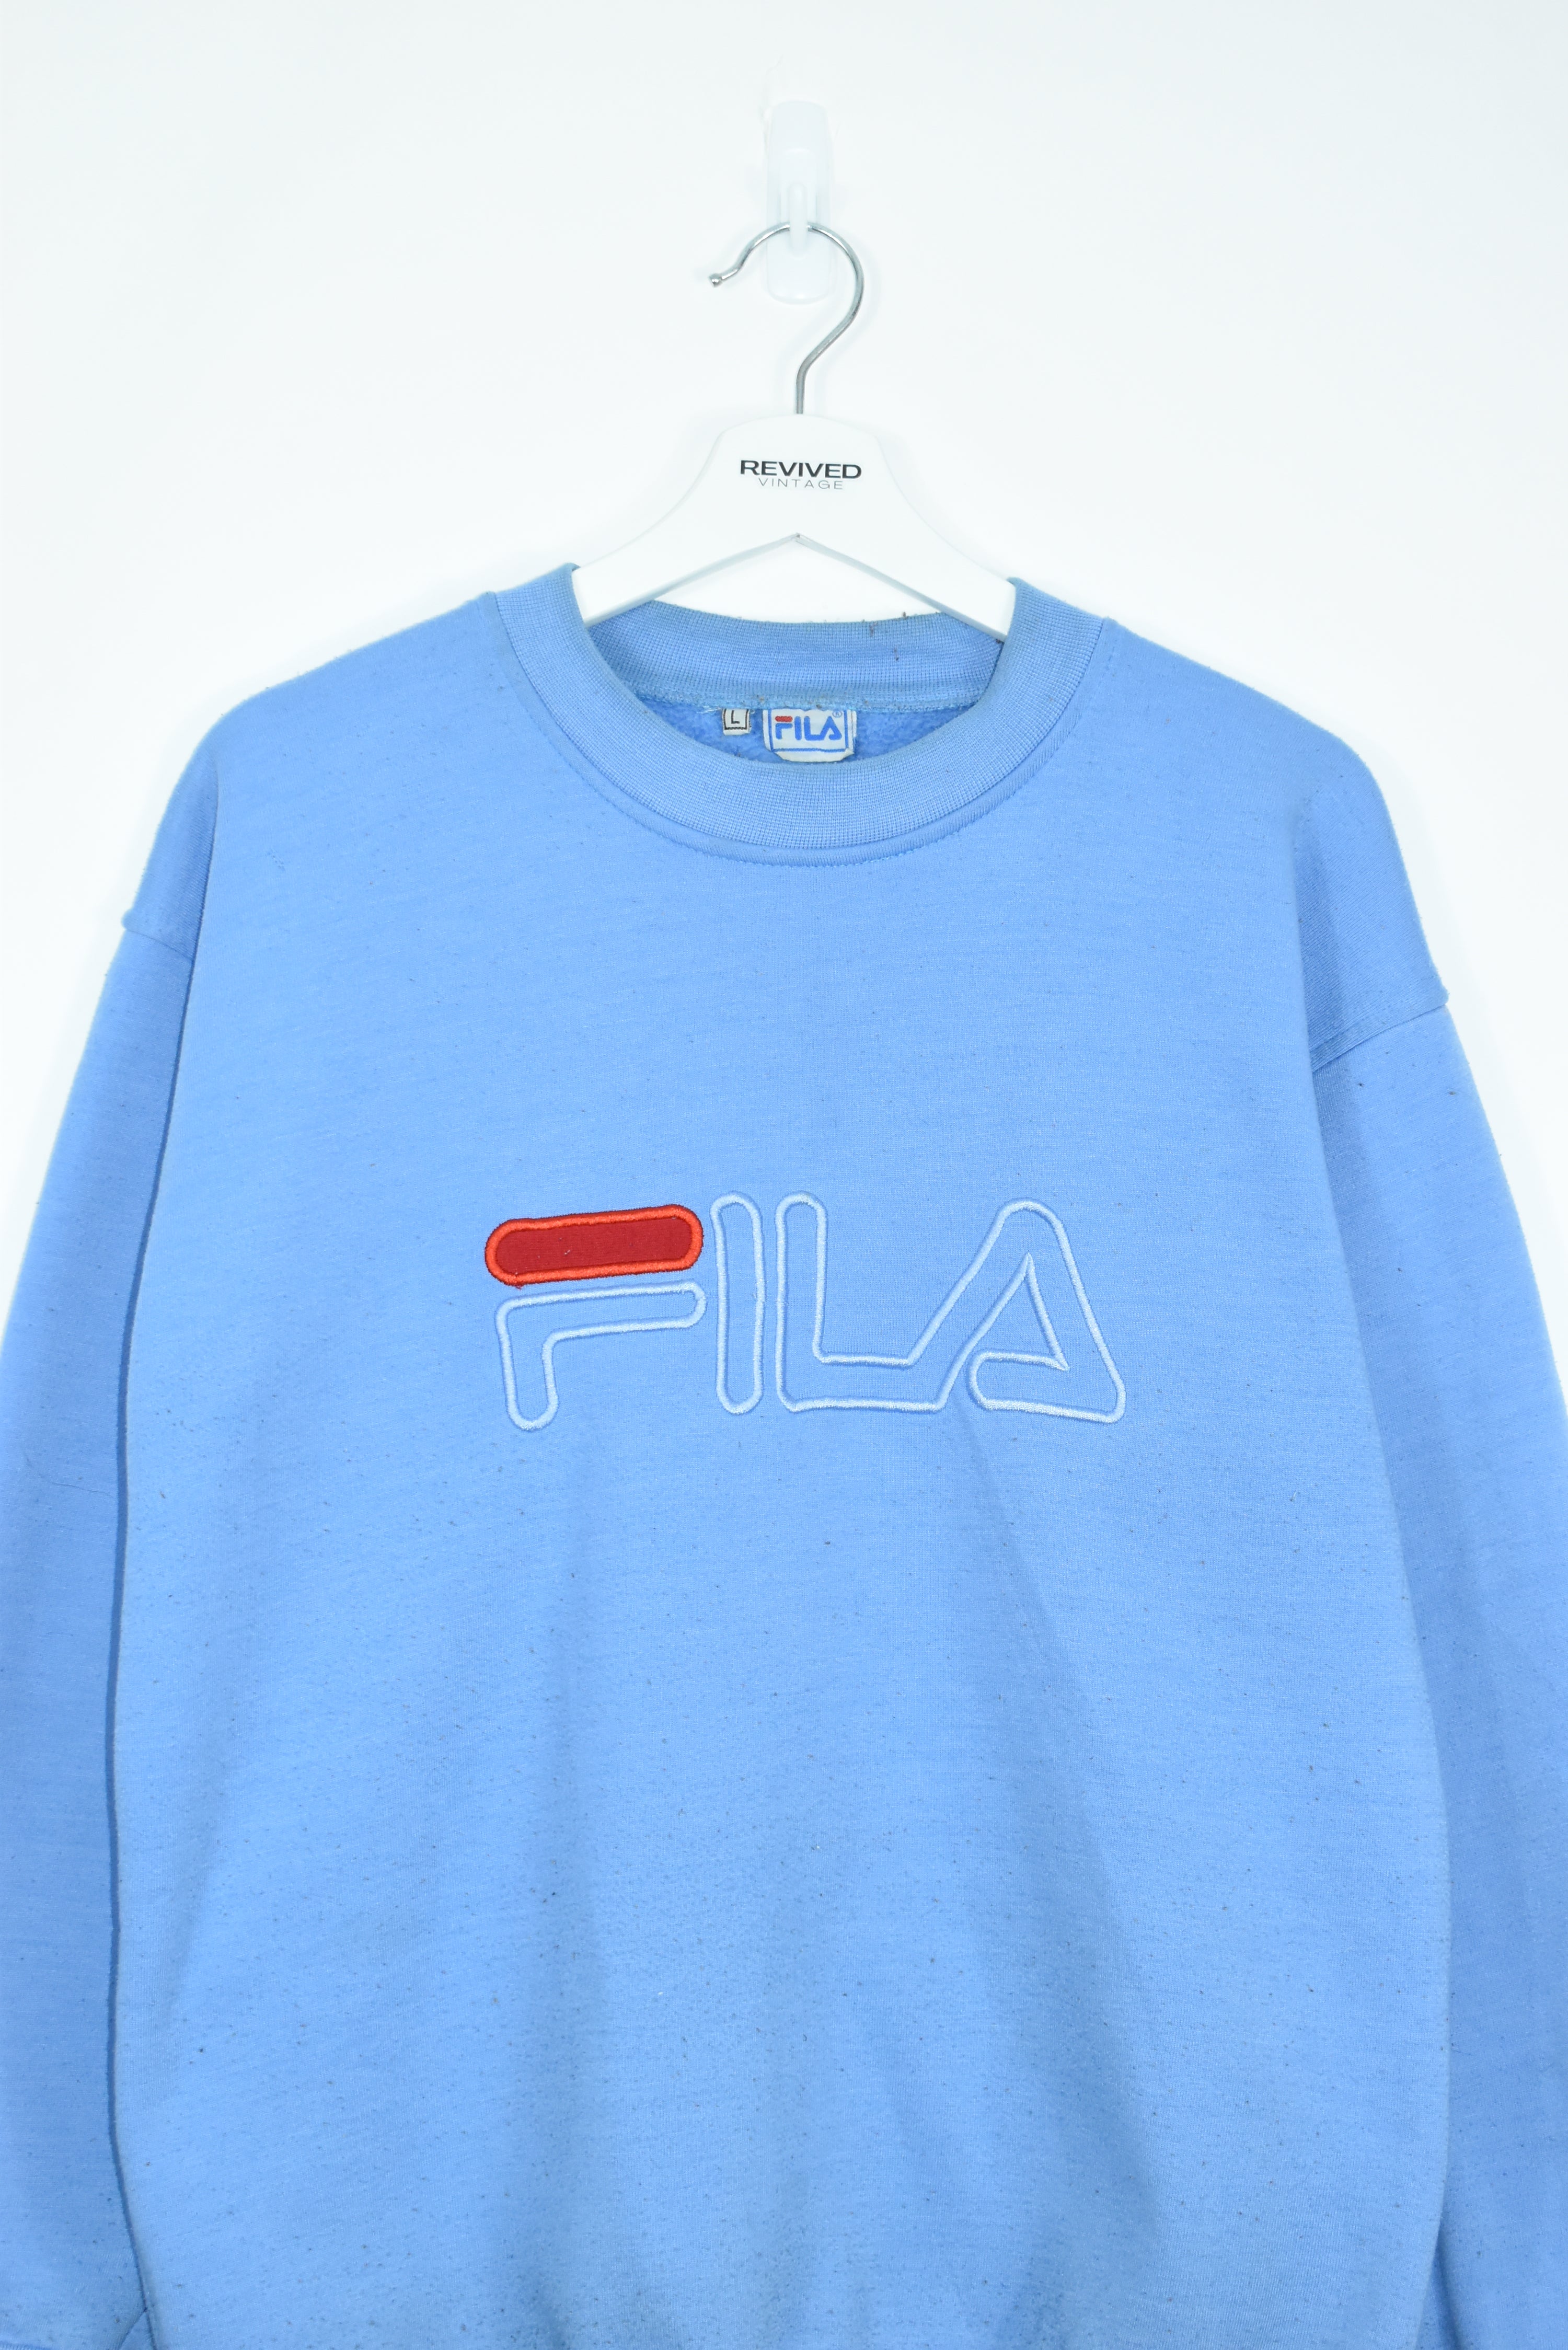 Vintage Fila Embroidery Sweatshirt Baby Blue Large